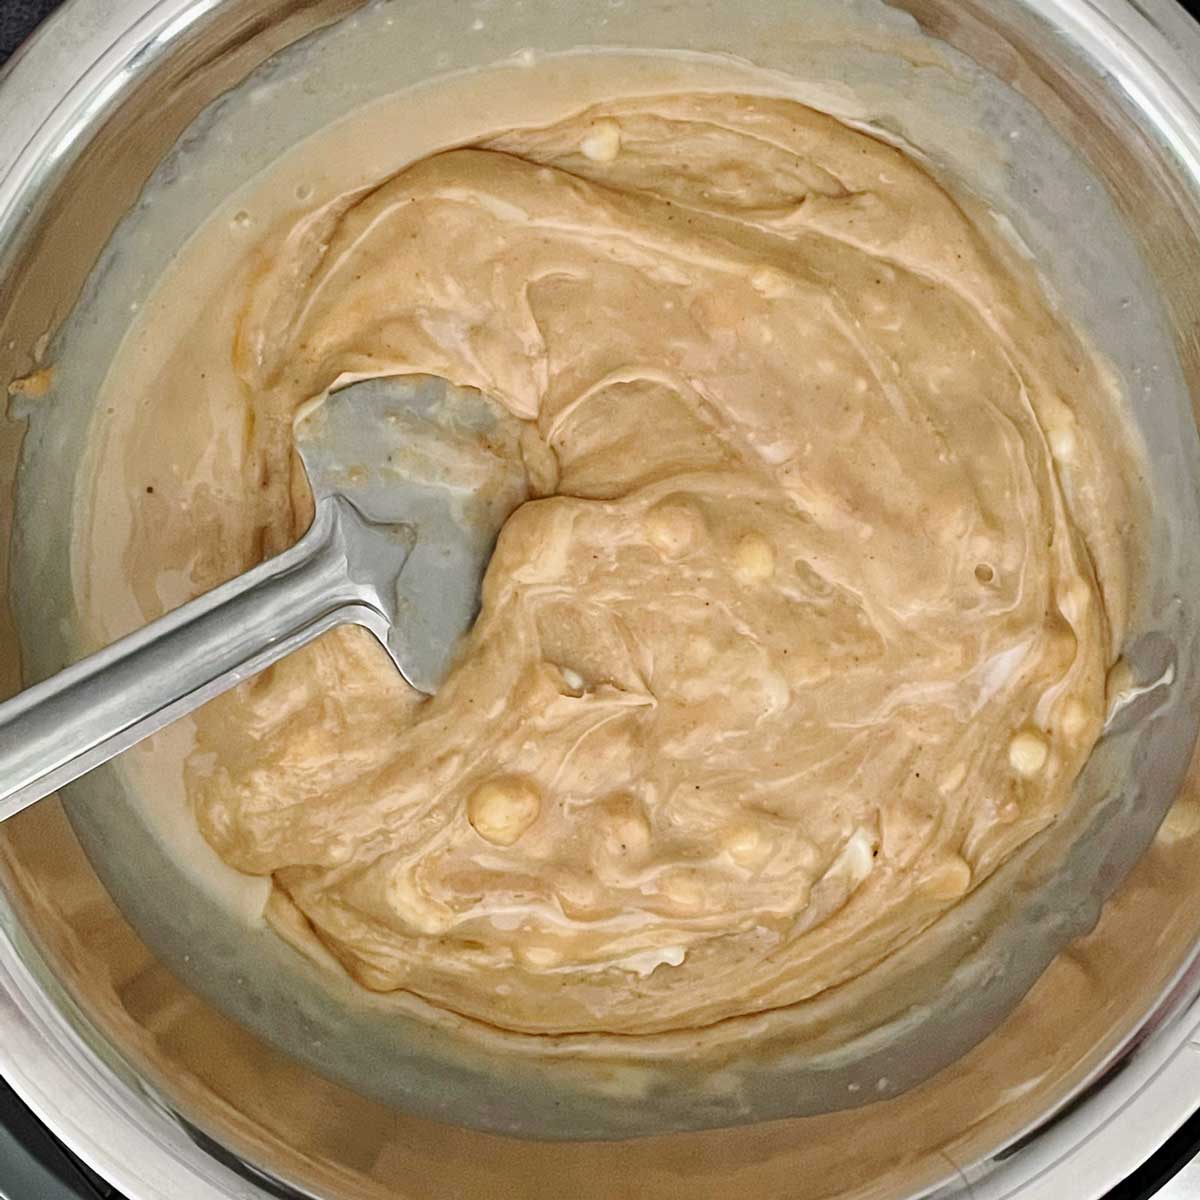 Peanut butter fudge mix in a steel bowl.